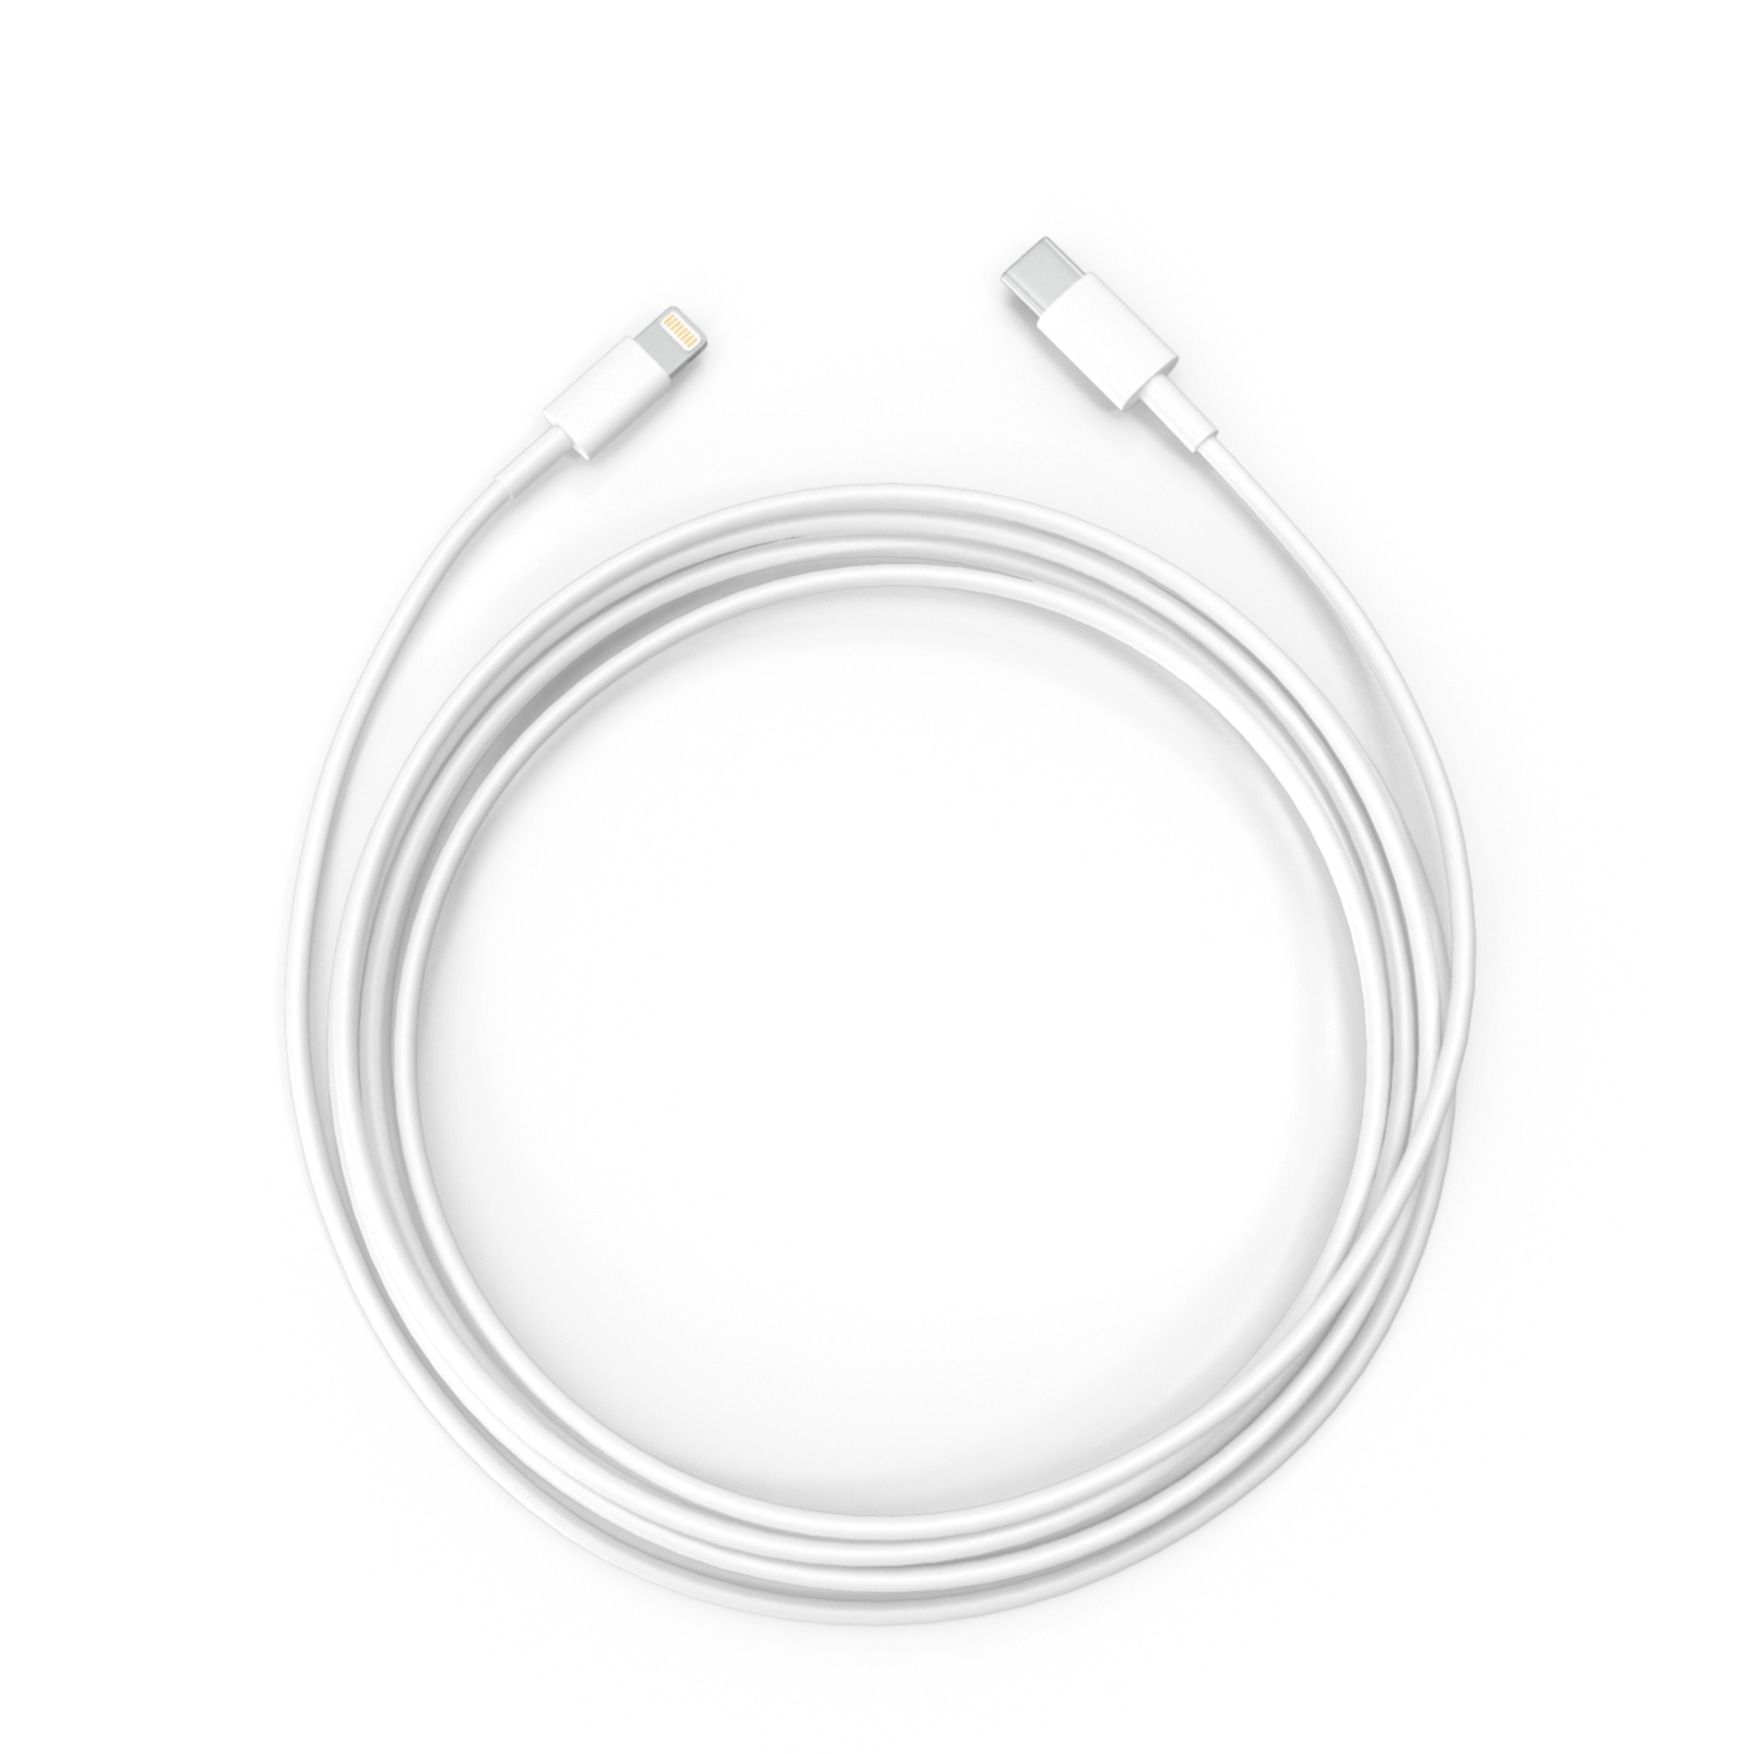 Image of Apple - (1m) iPhone 13 Mini Lightning auf USB C Ladekabel Datenkabel MK0X2ZM/A - Weiss bei Apfelkiste.ch